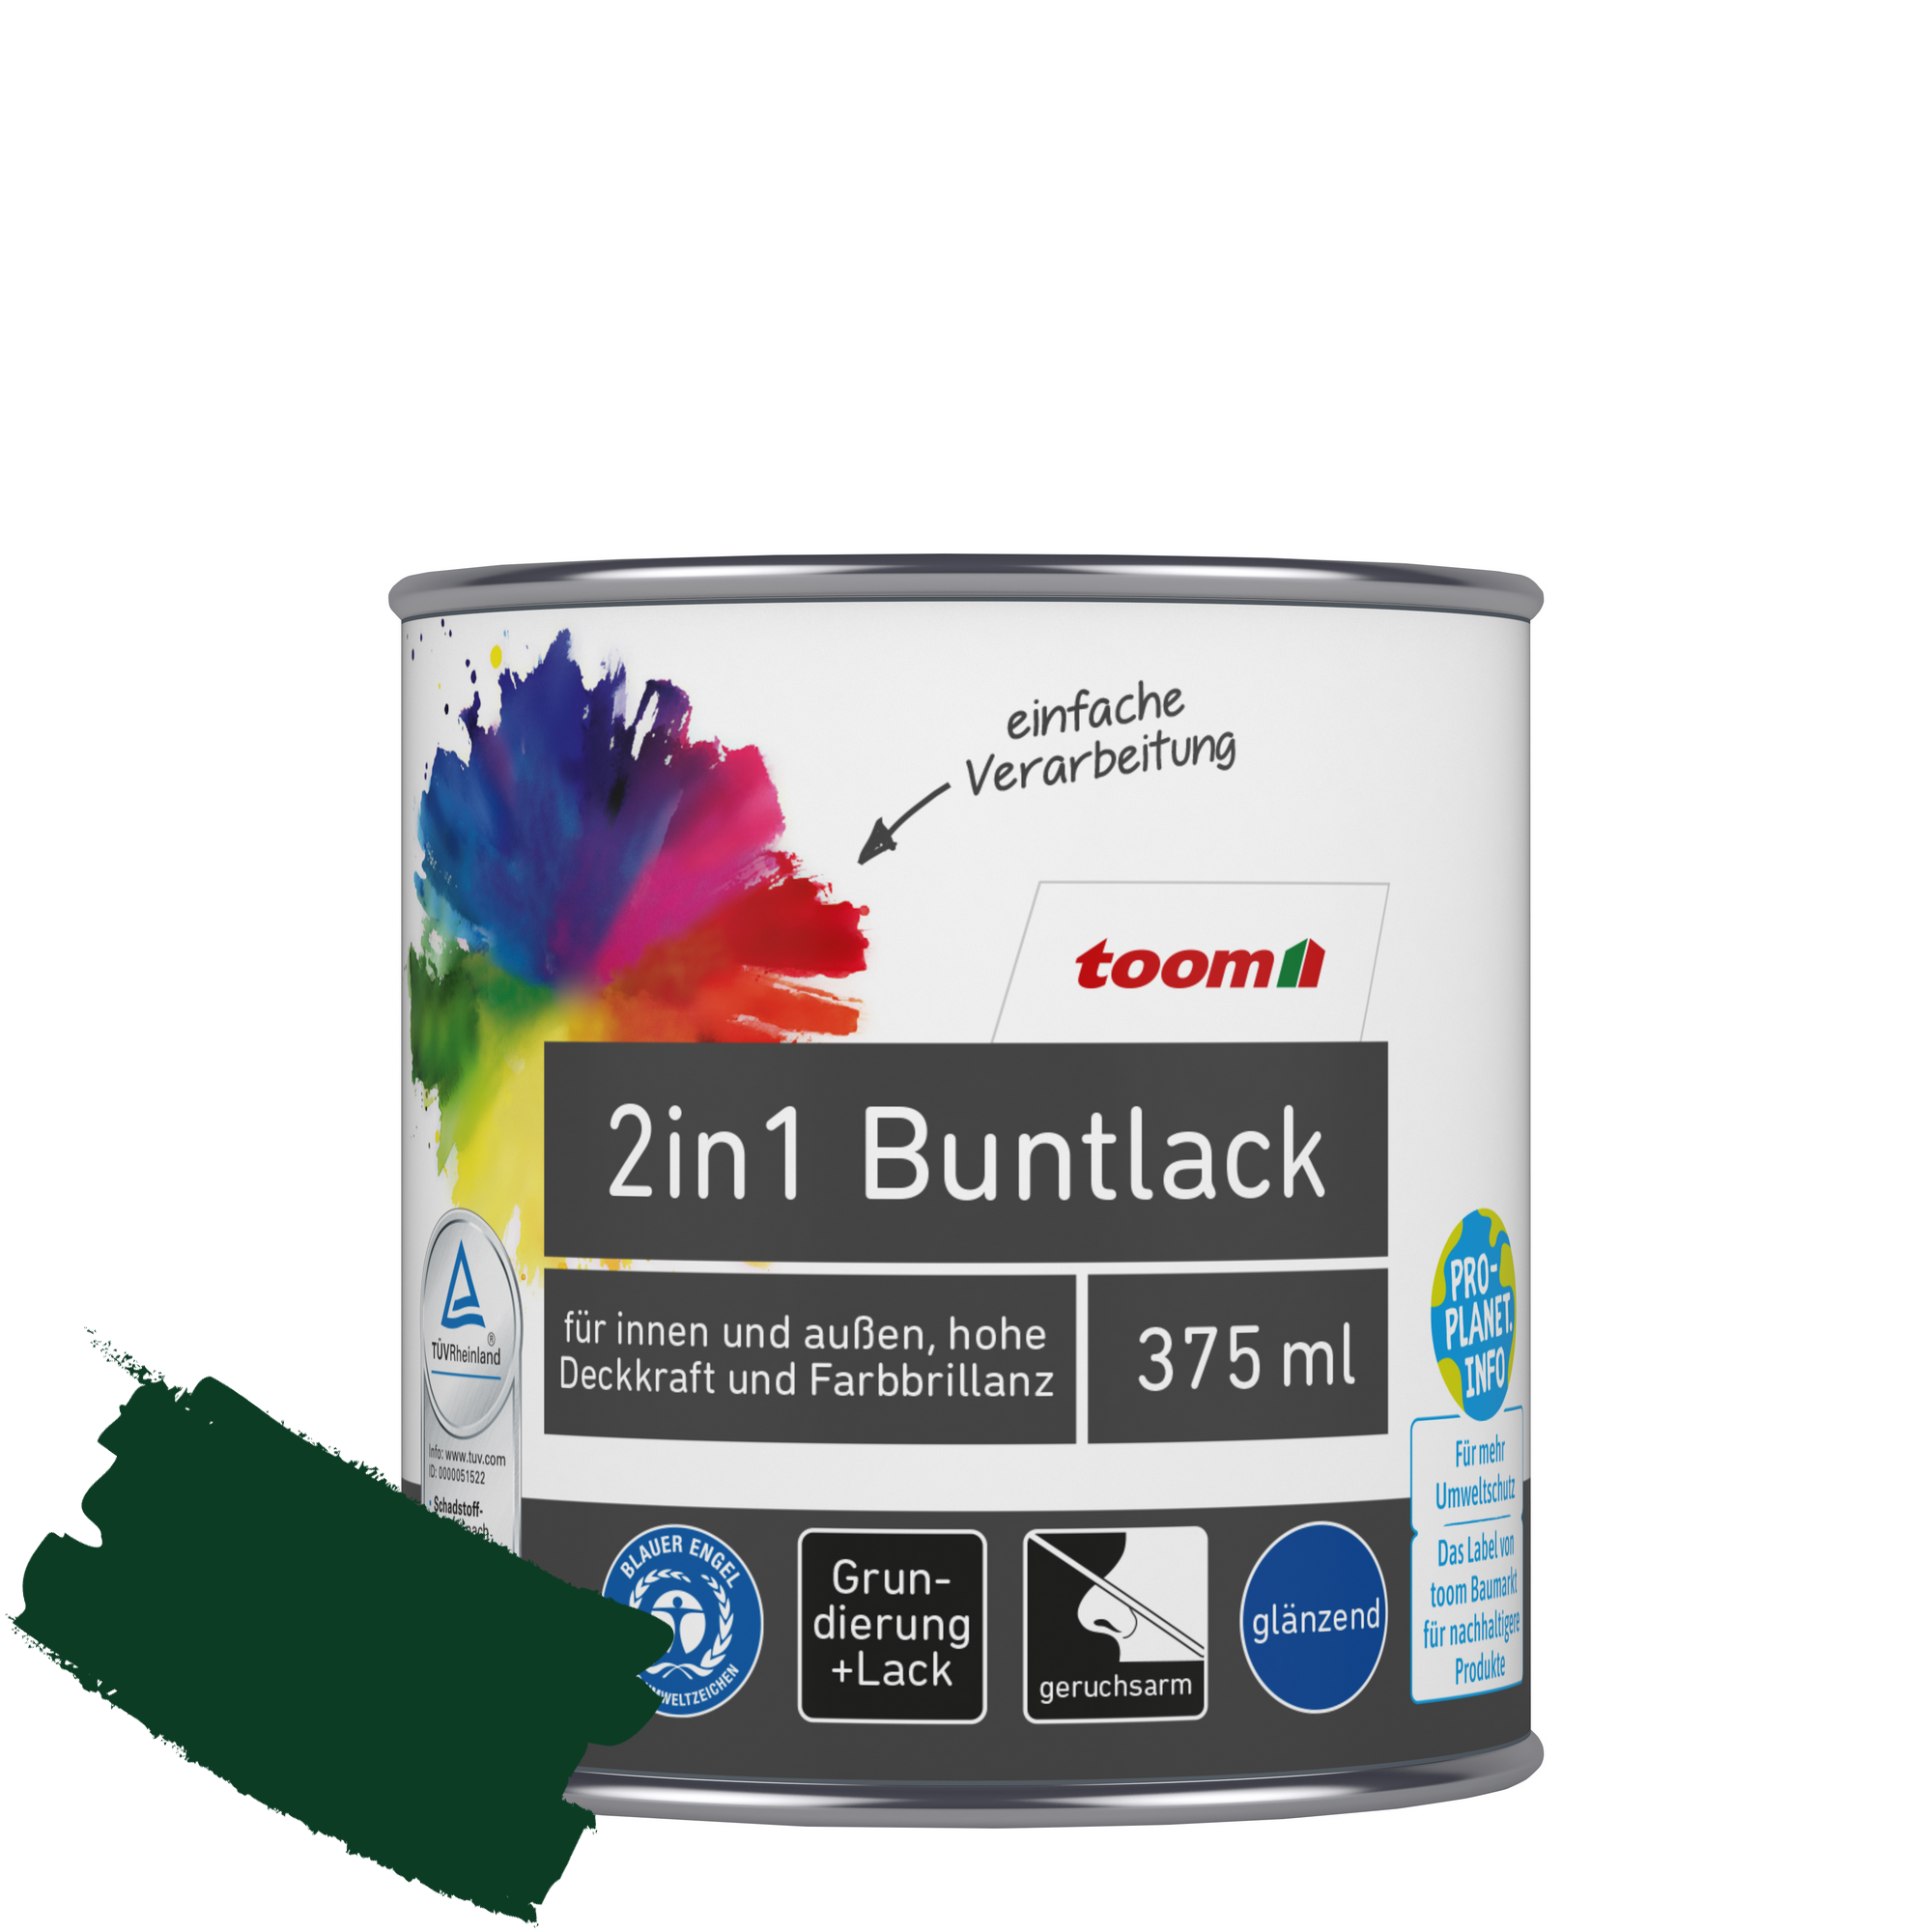 2in1 Buntlack 'Morgentau' moosgrün glänzend 375 ml + product picture